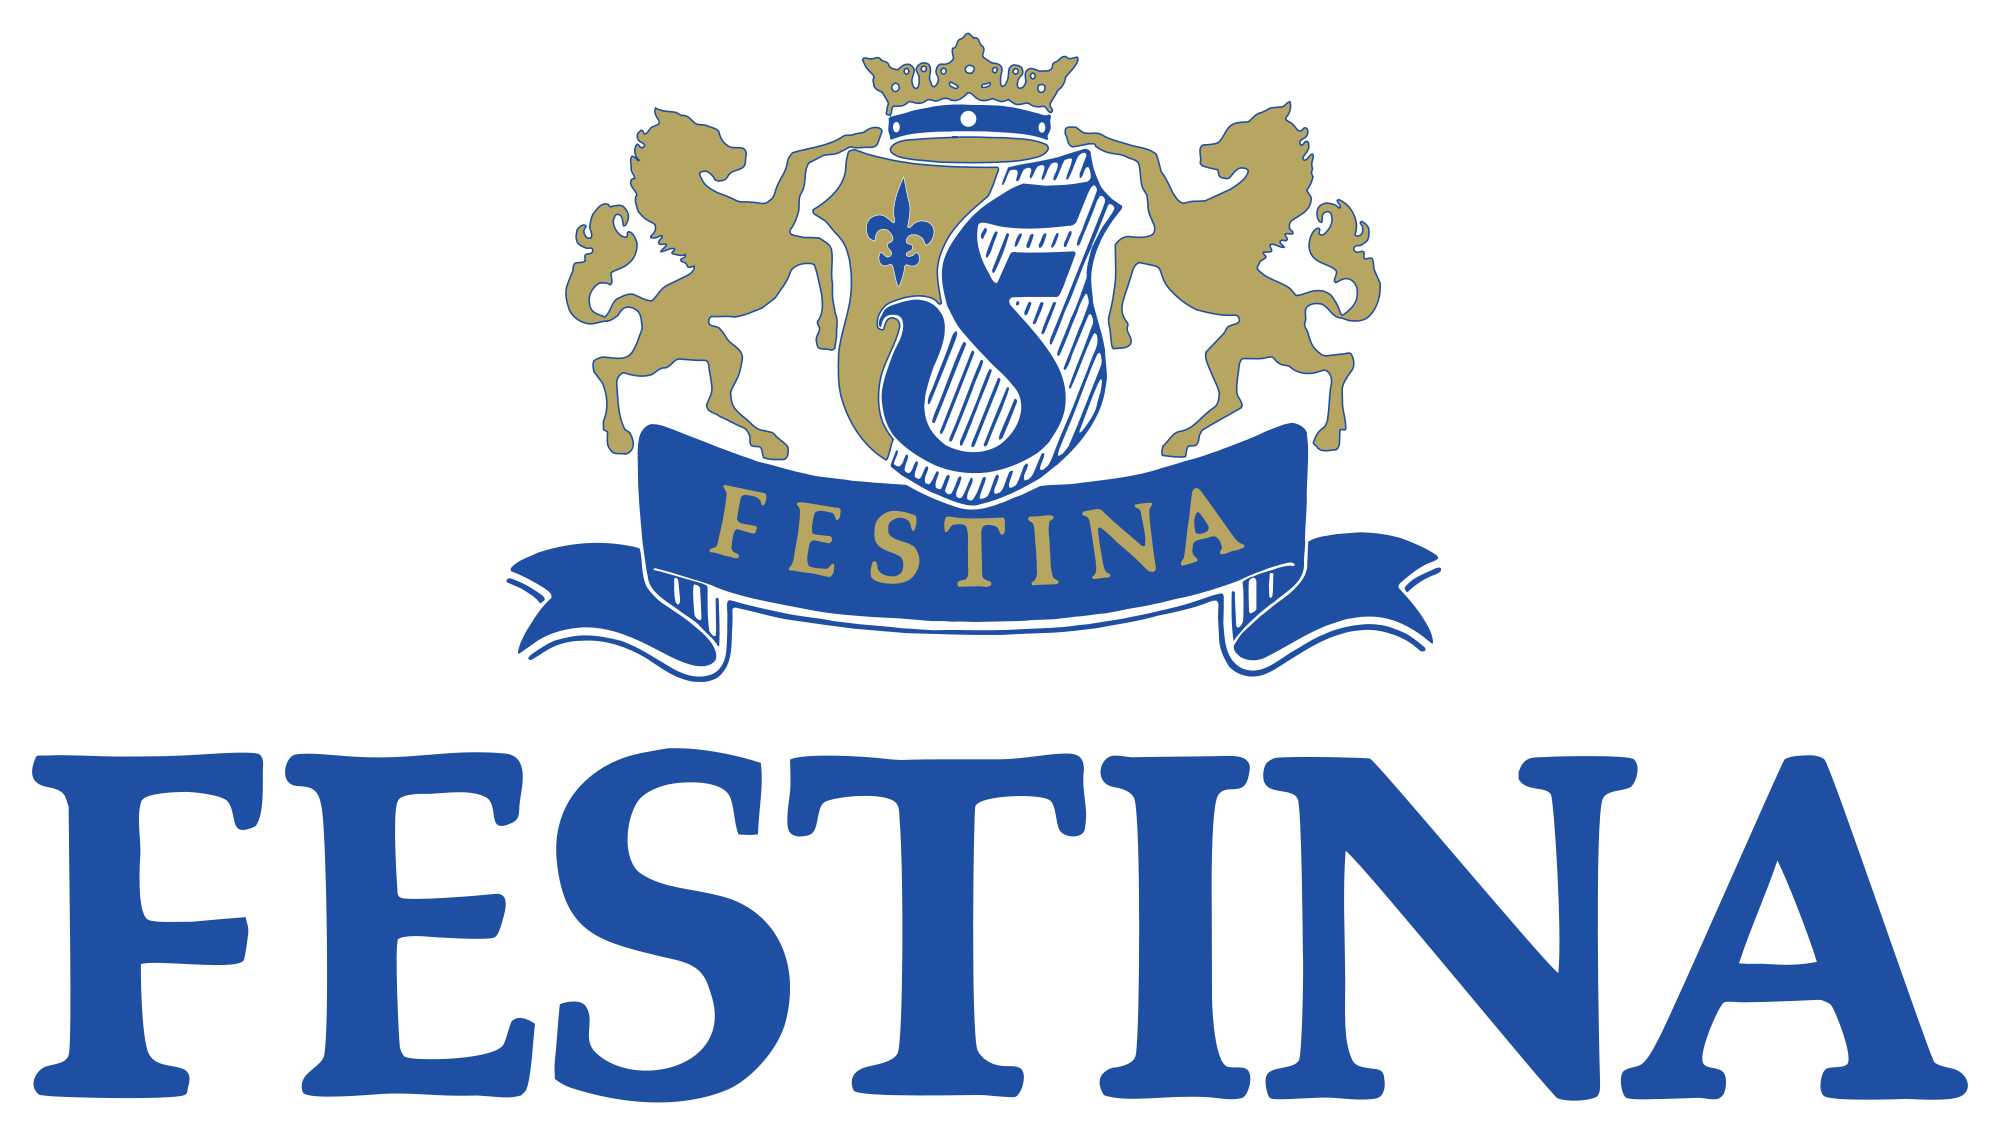 Picture for manufacturer Festina